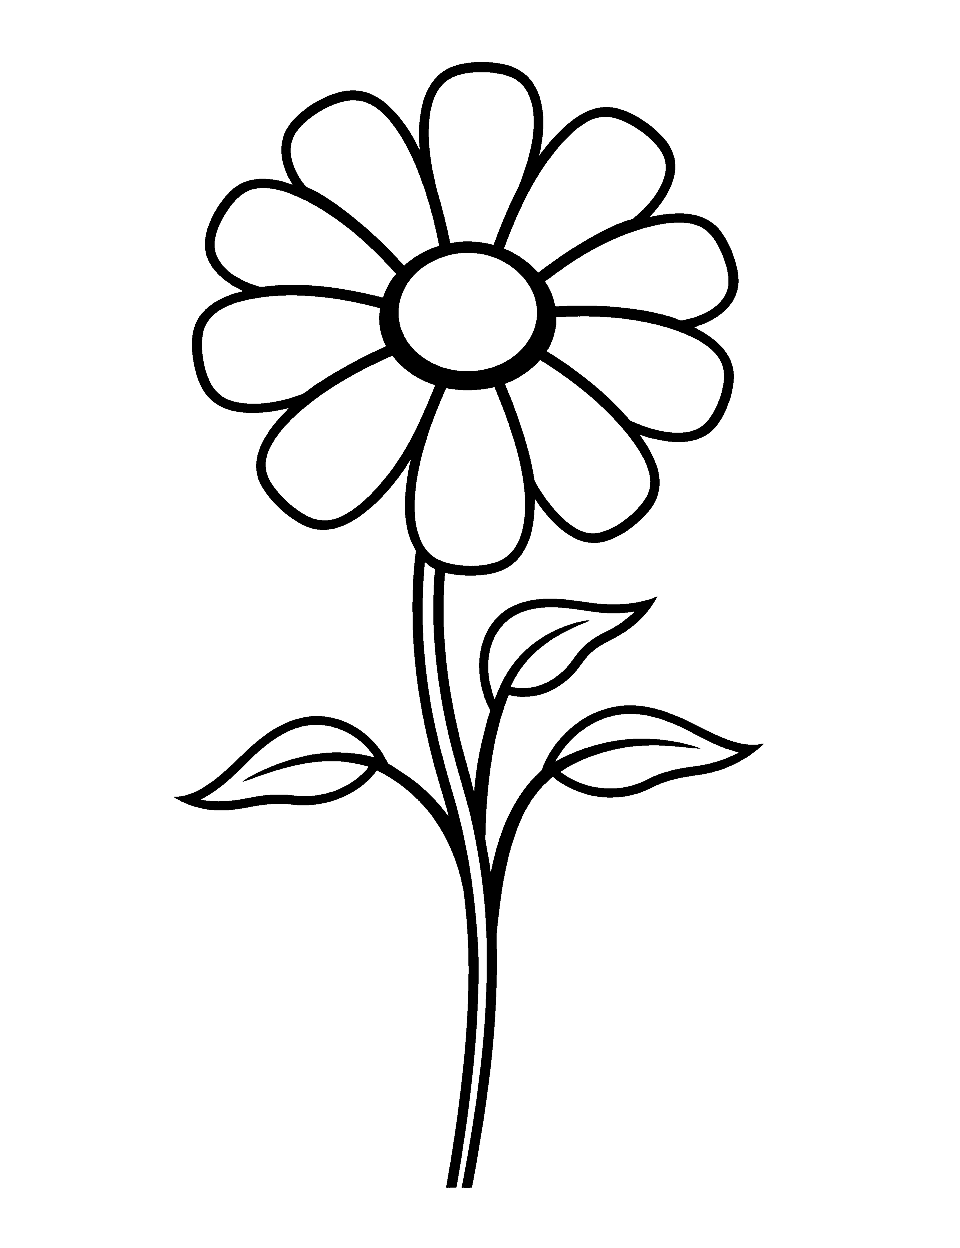 Simple Daisy for Preschool Flower Coloring Page - A simple, large daisy design perfect for preschool kids.